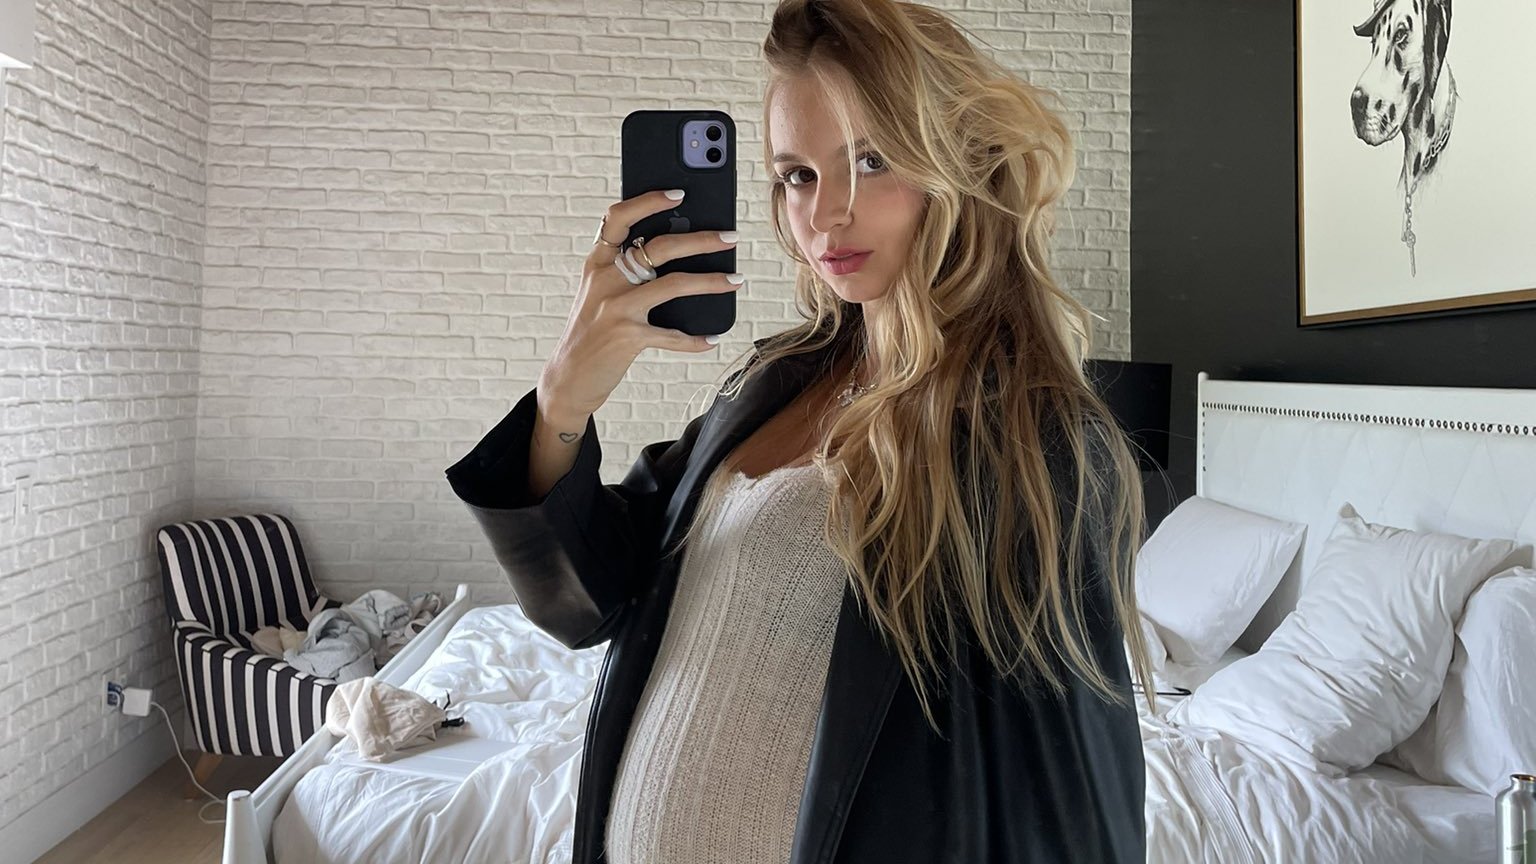 Isabella Scherer desabafa e revela comentários que recebeu sobre a maternidade: “Horrível”